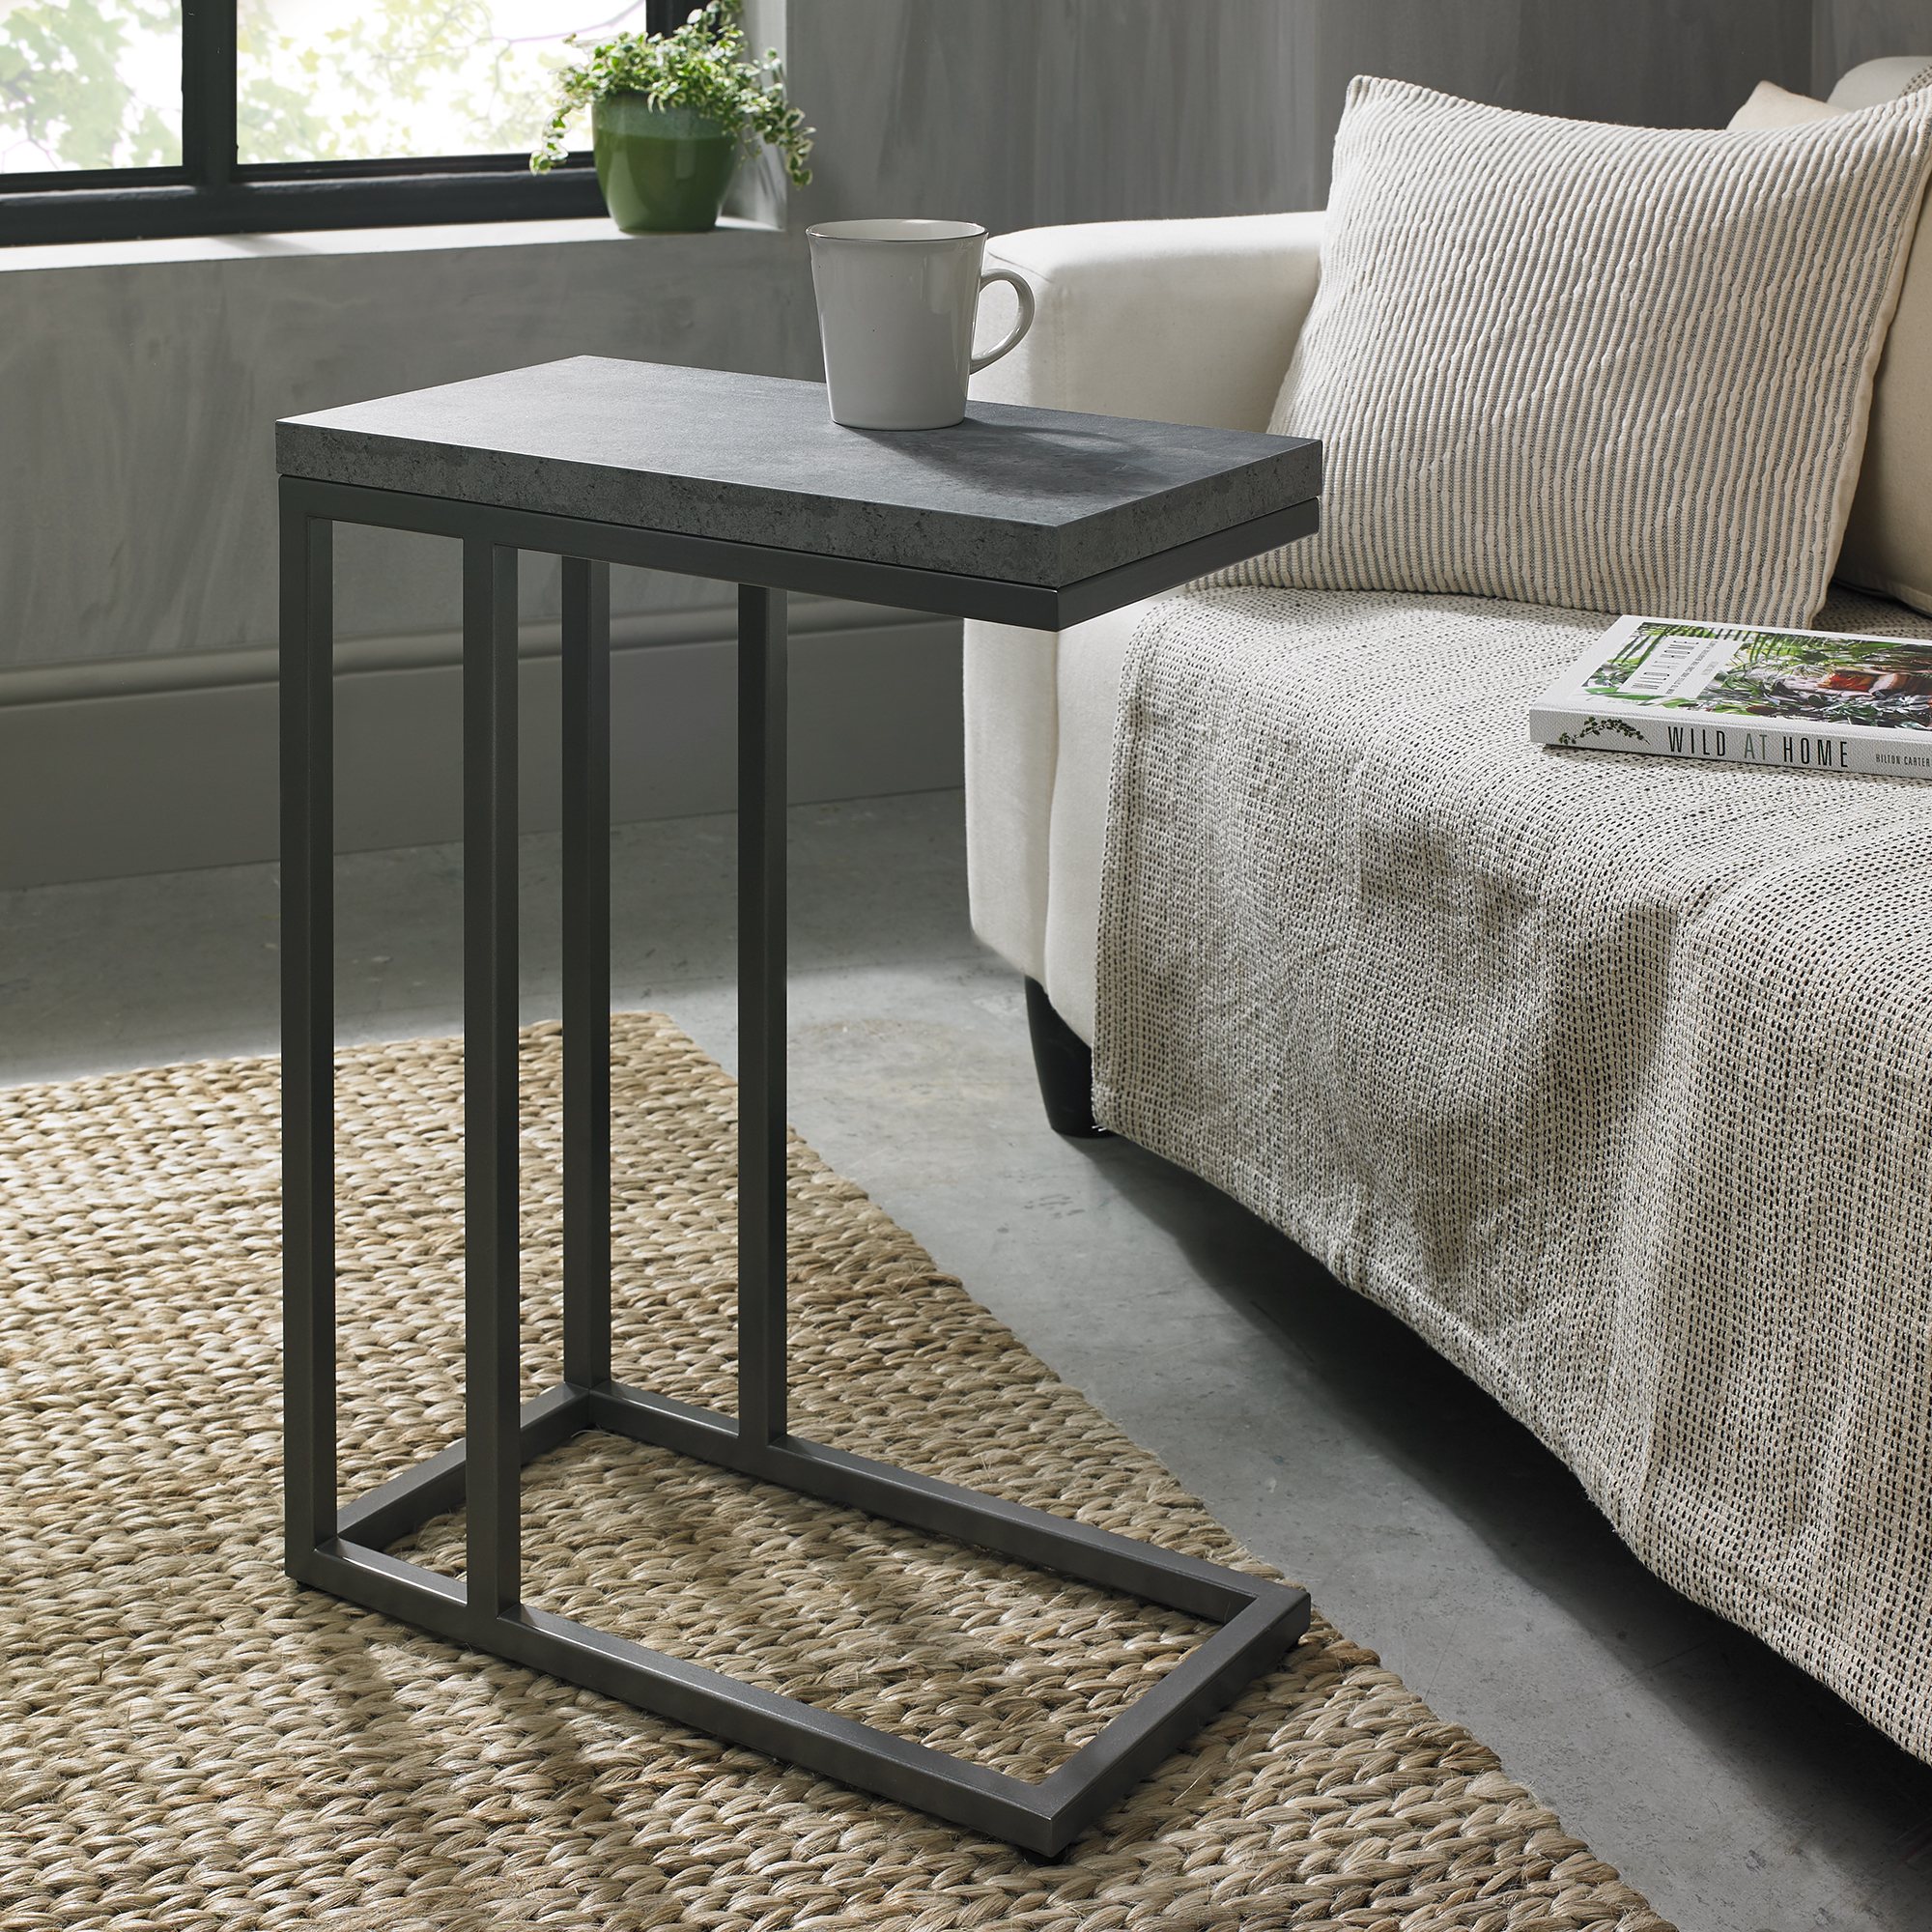 Home Origins Degas Zinc & Dark Grey Sofa Table - feature